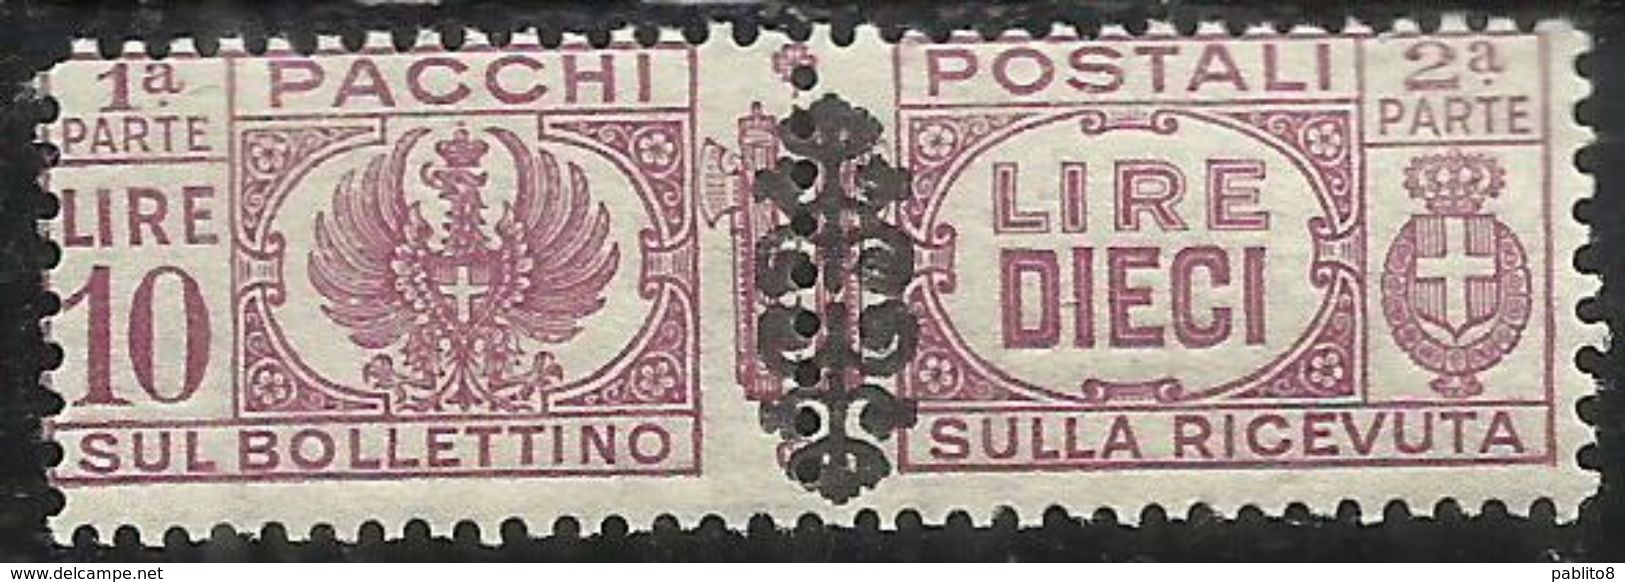 ITALIA REGNO ITALY KINGDOM 1945 LUOGOTENENZA PACCHI POSTALI PARCEL POST FREGIO LIRE 10 MNH - Colis-postaux